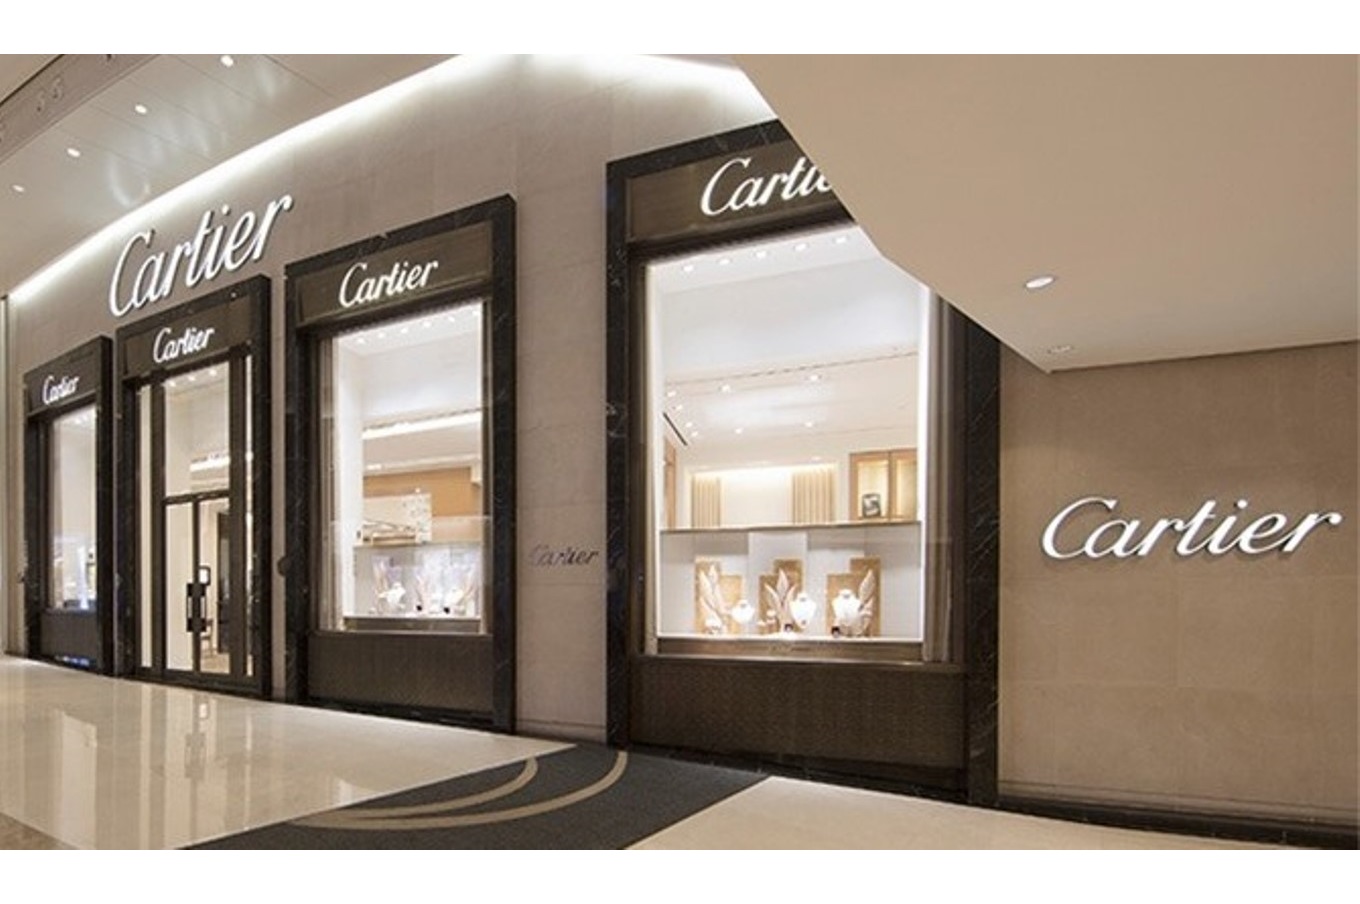 cartier jewellery store